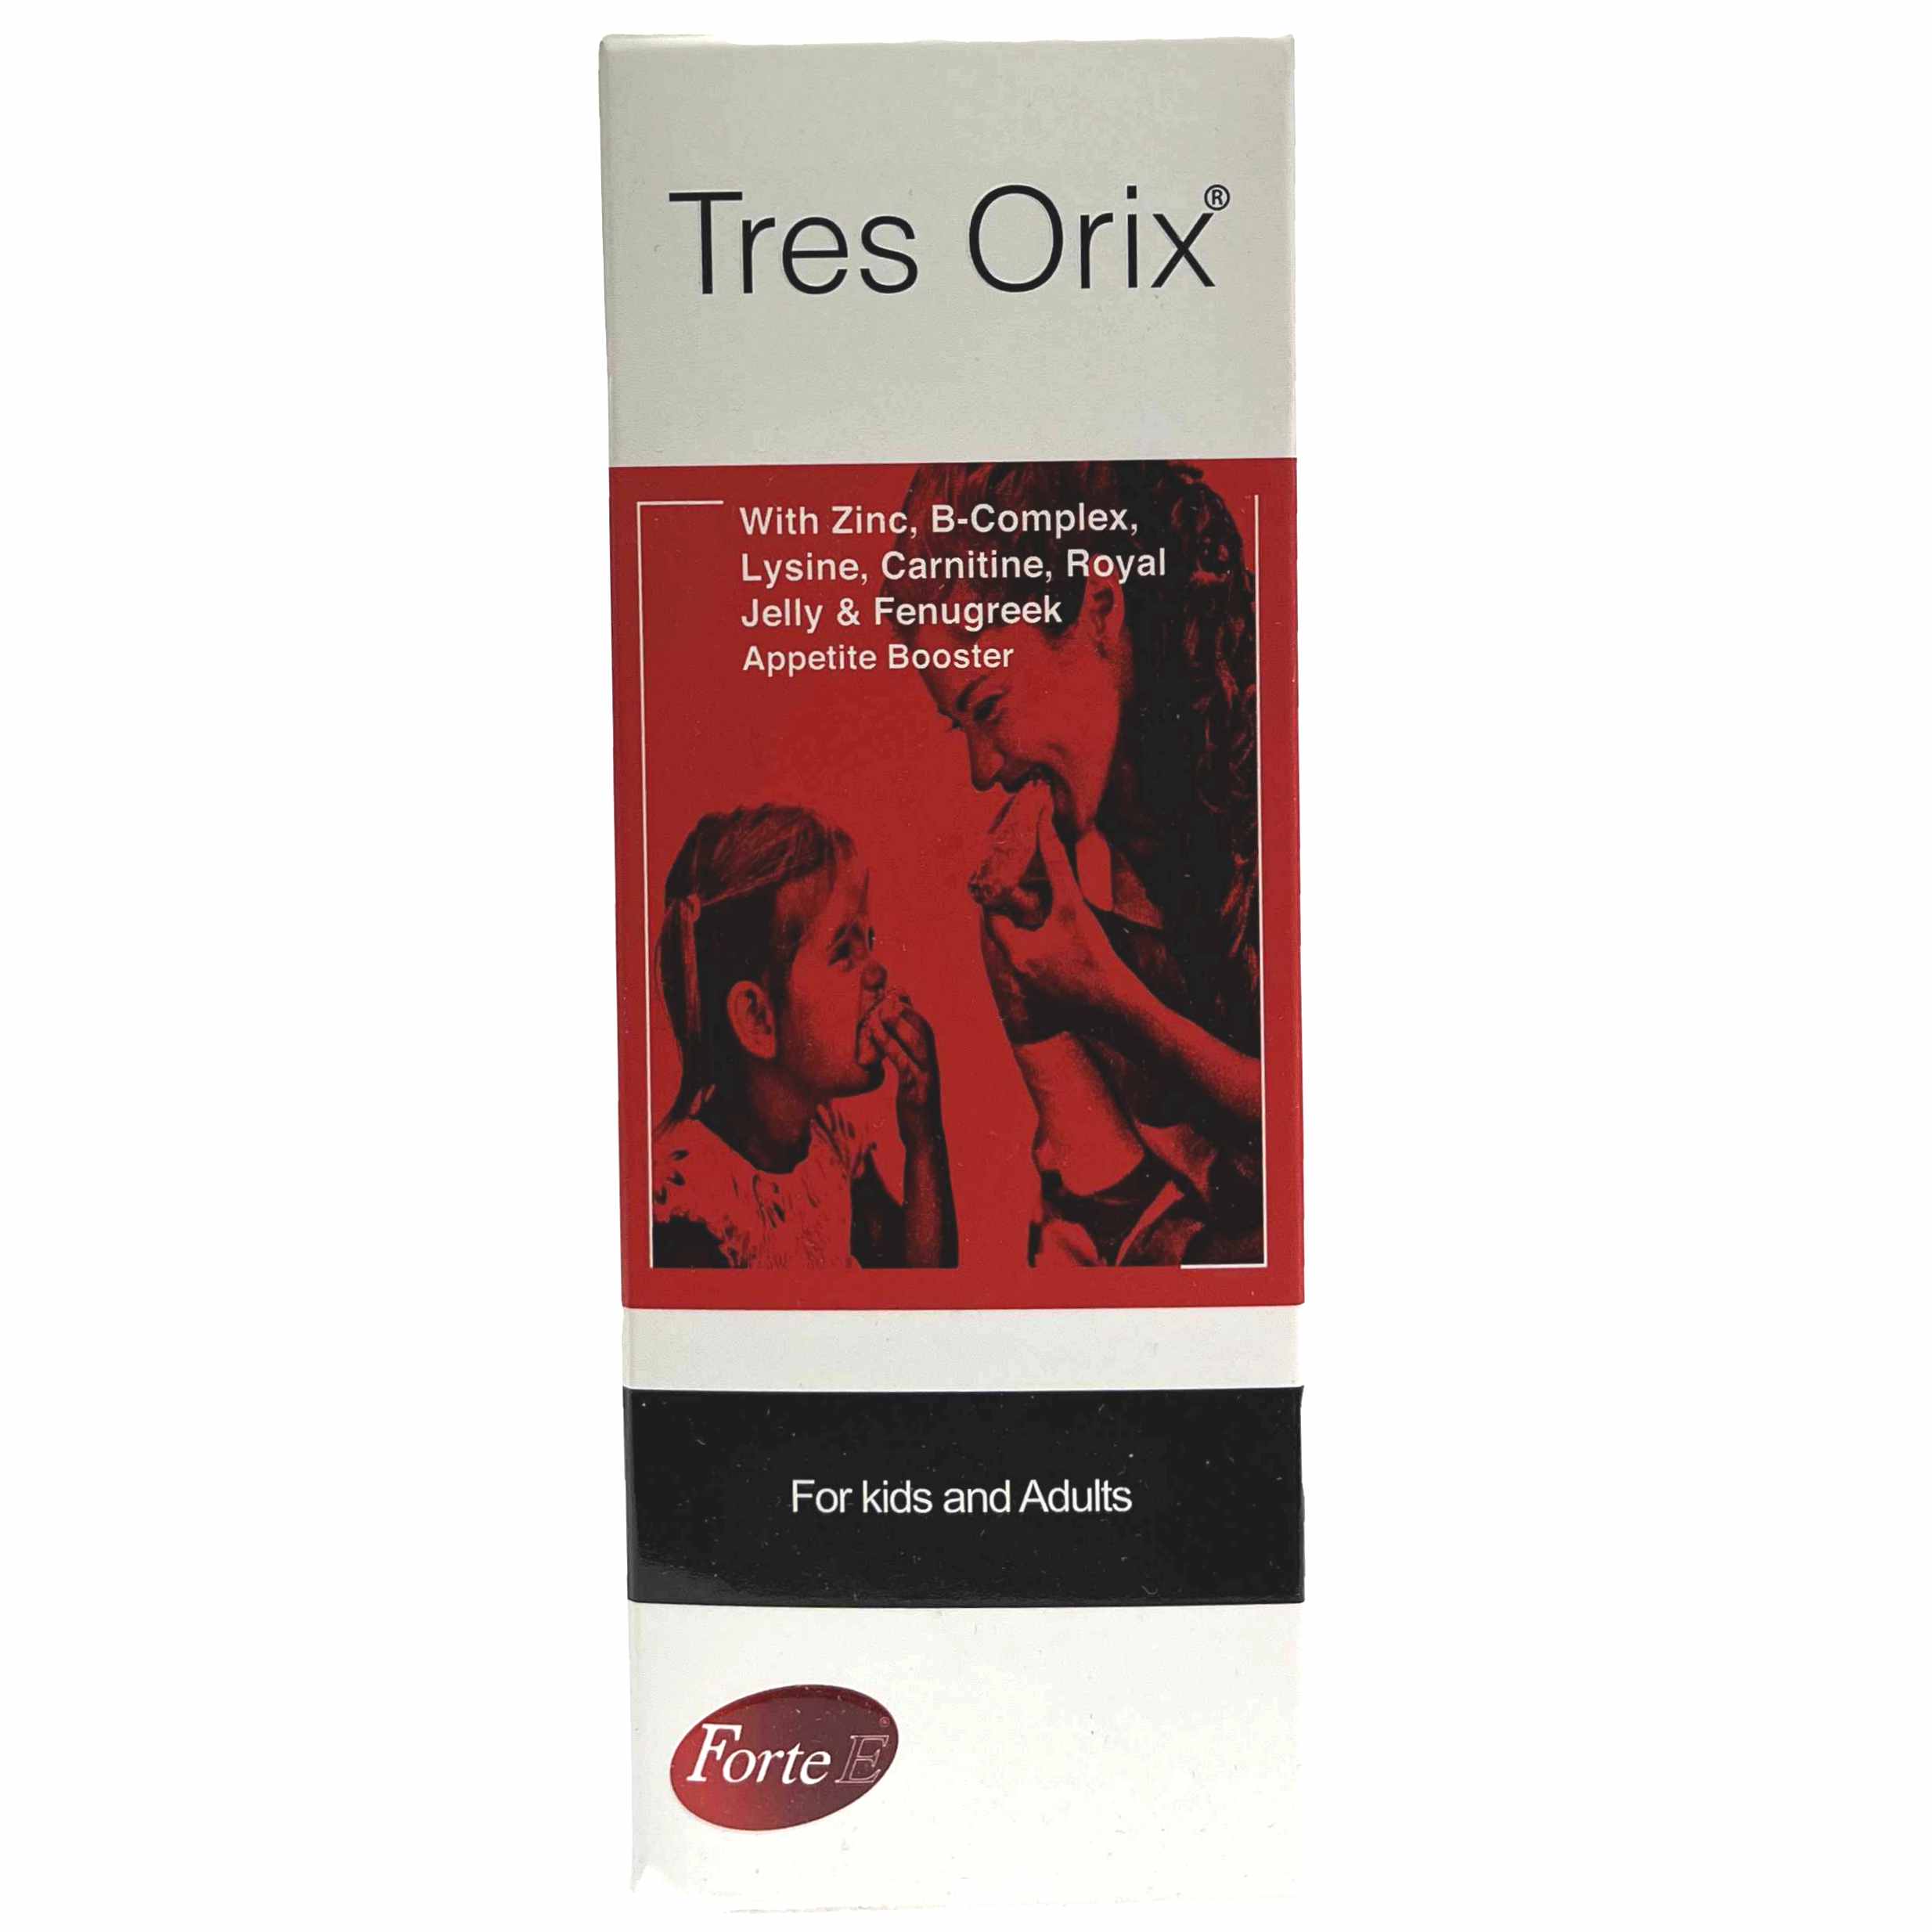 شربت ترس اوریکس فورت ای سمر طب درمان Teres Orix